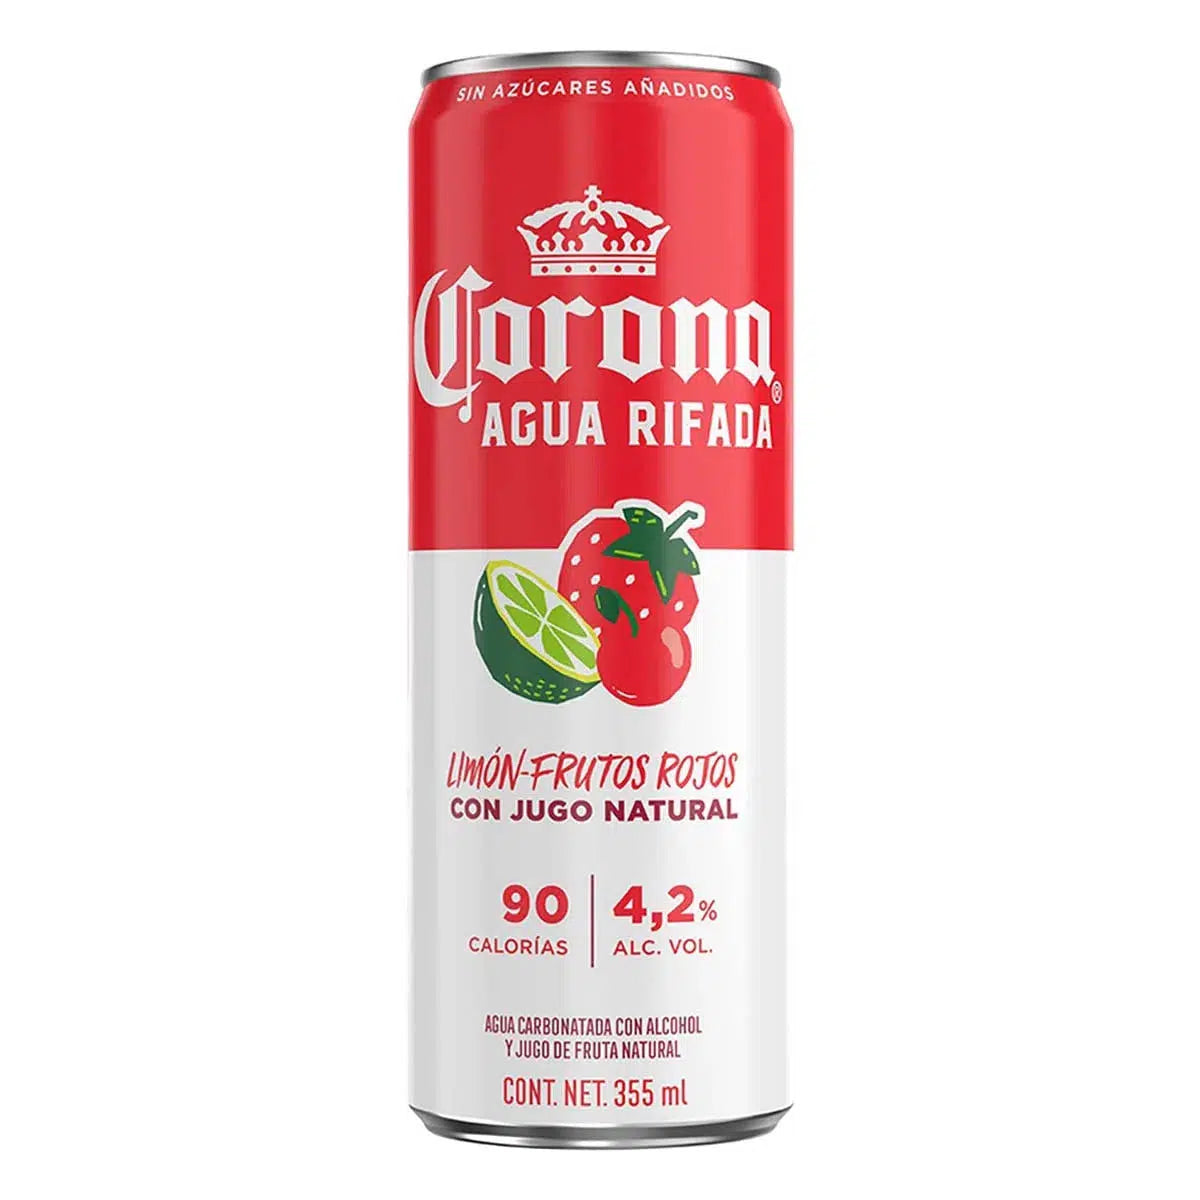 Corona Agua Rifada Limon-Frutos Rojos Seltzer 355mlx24